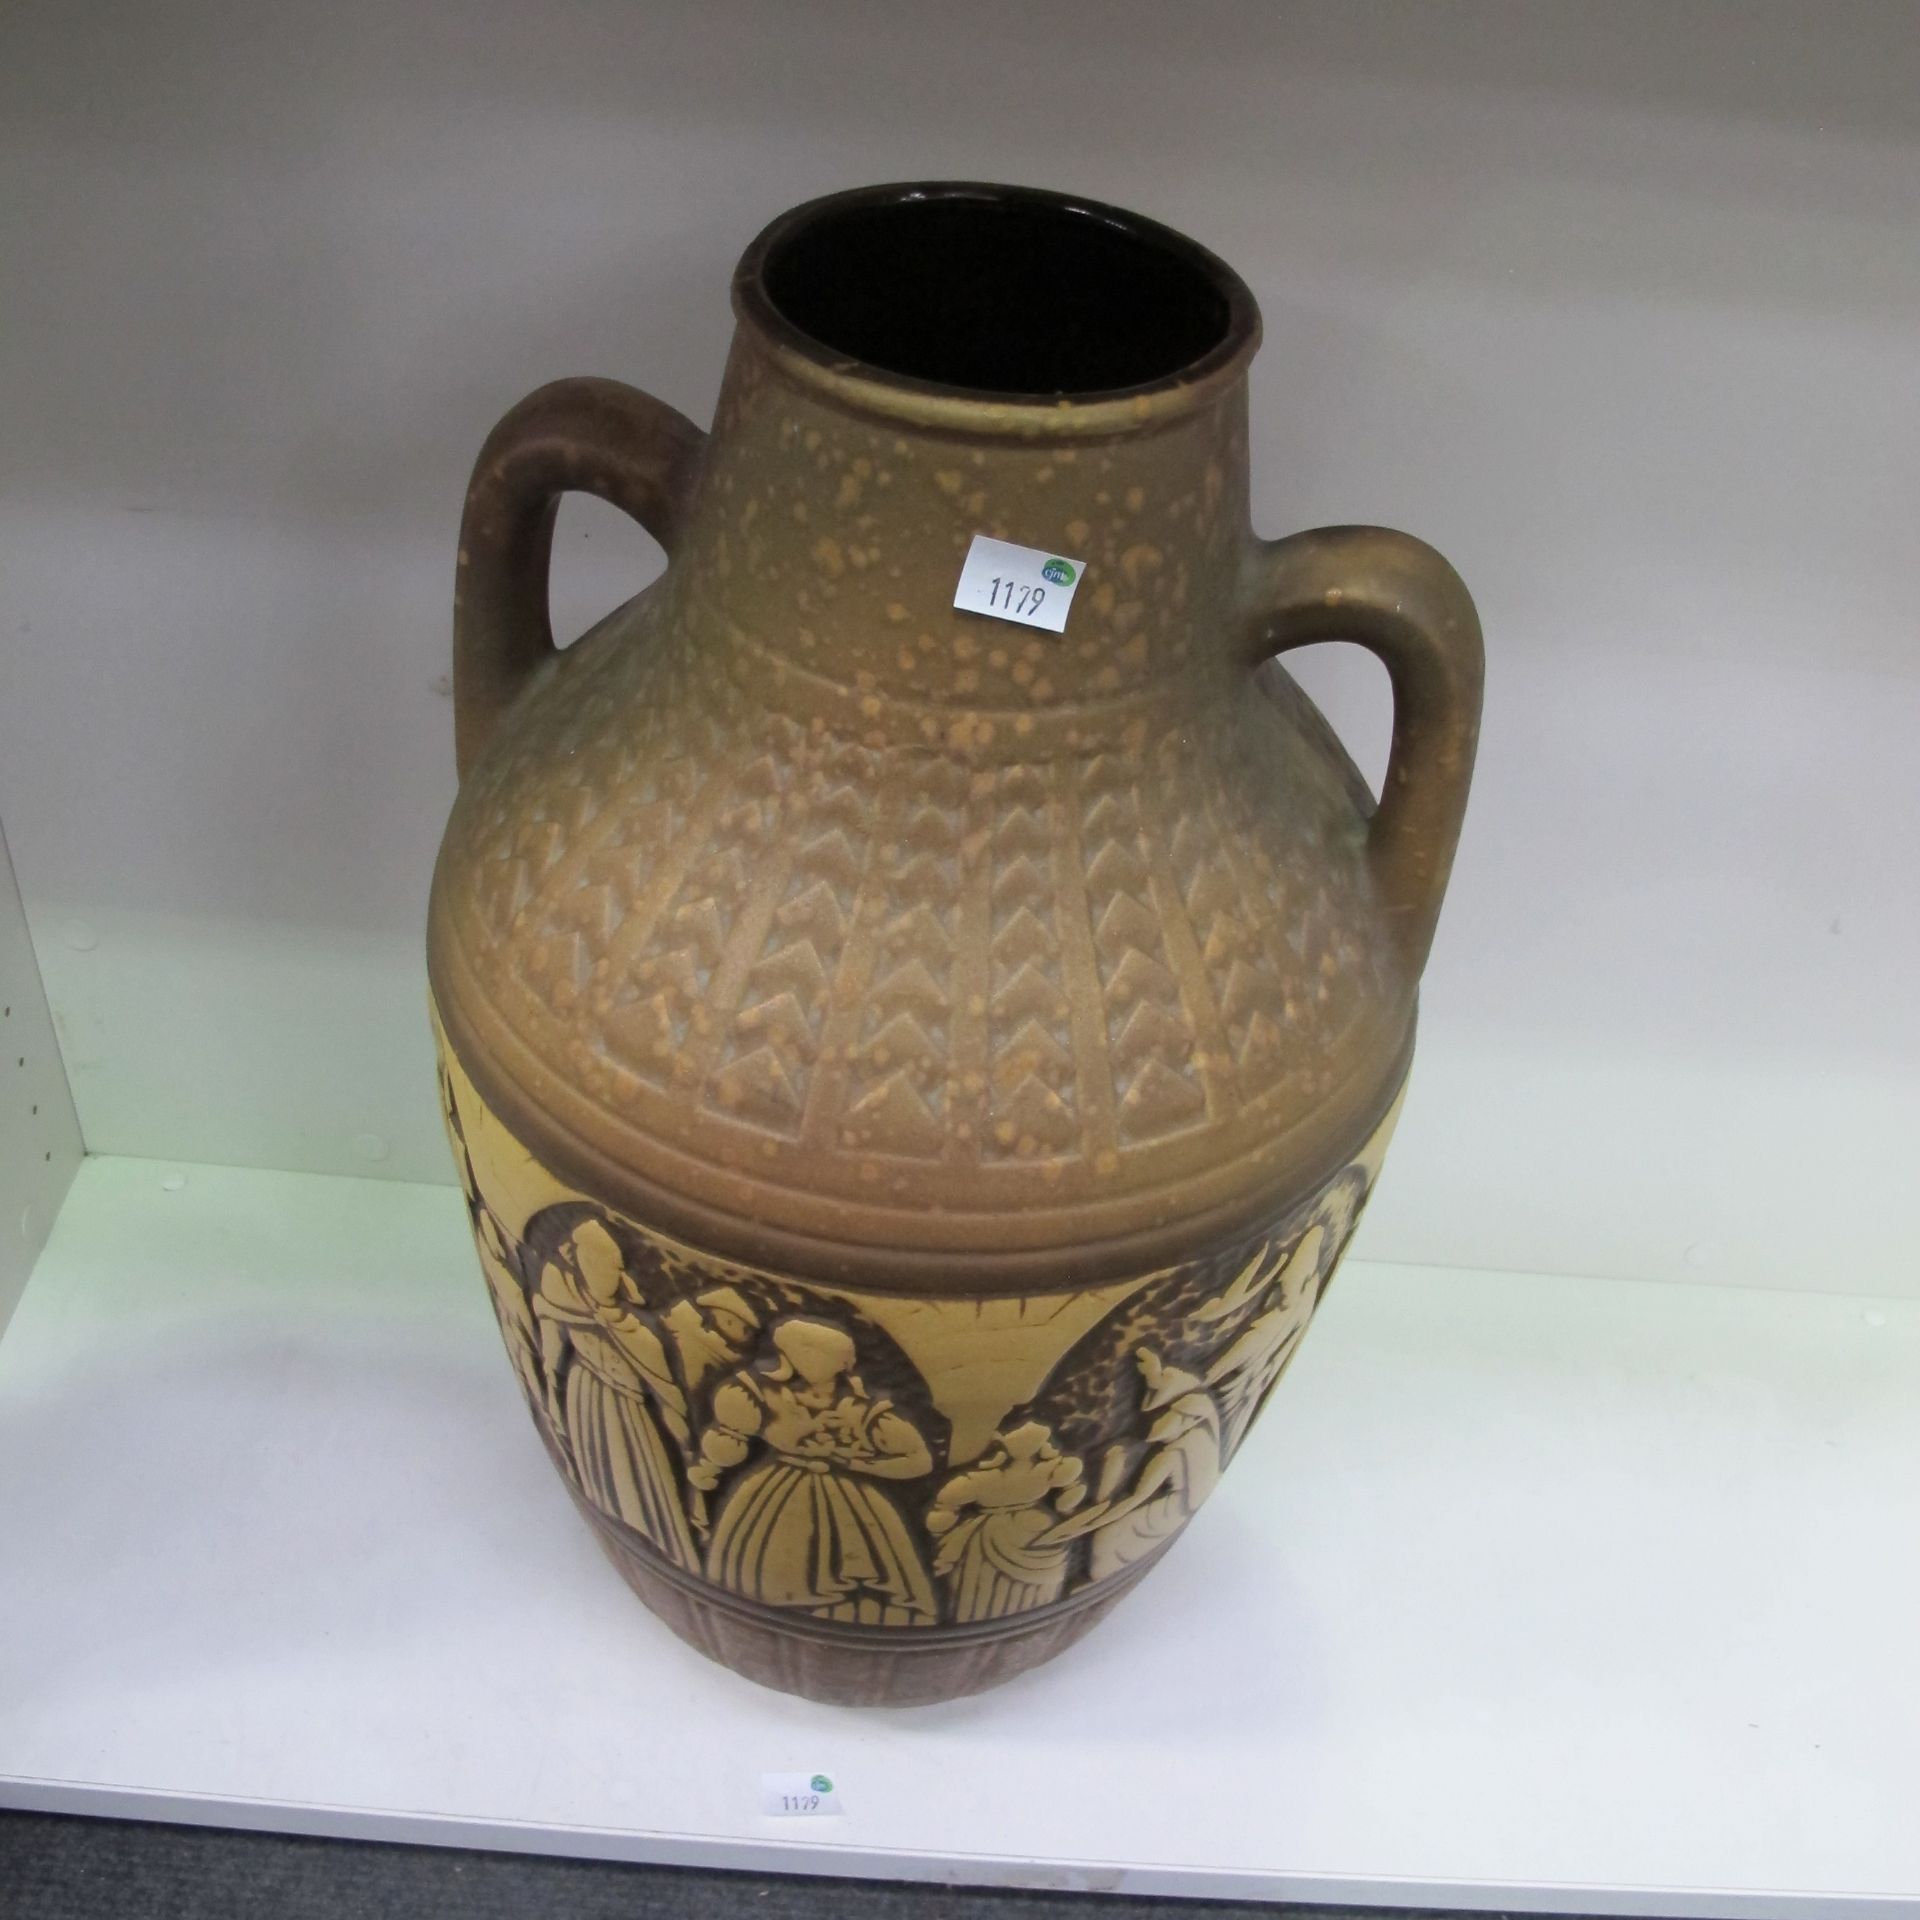 A large, tall two-handled stoneware jar (H60cm, diameter 20cm) (est £20-£30)